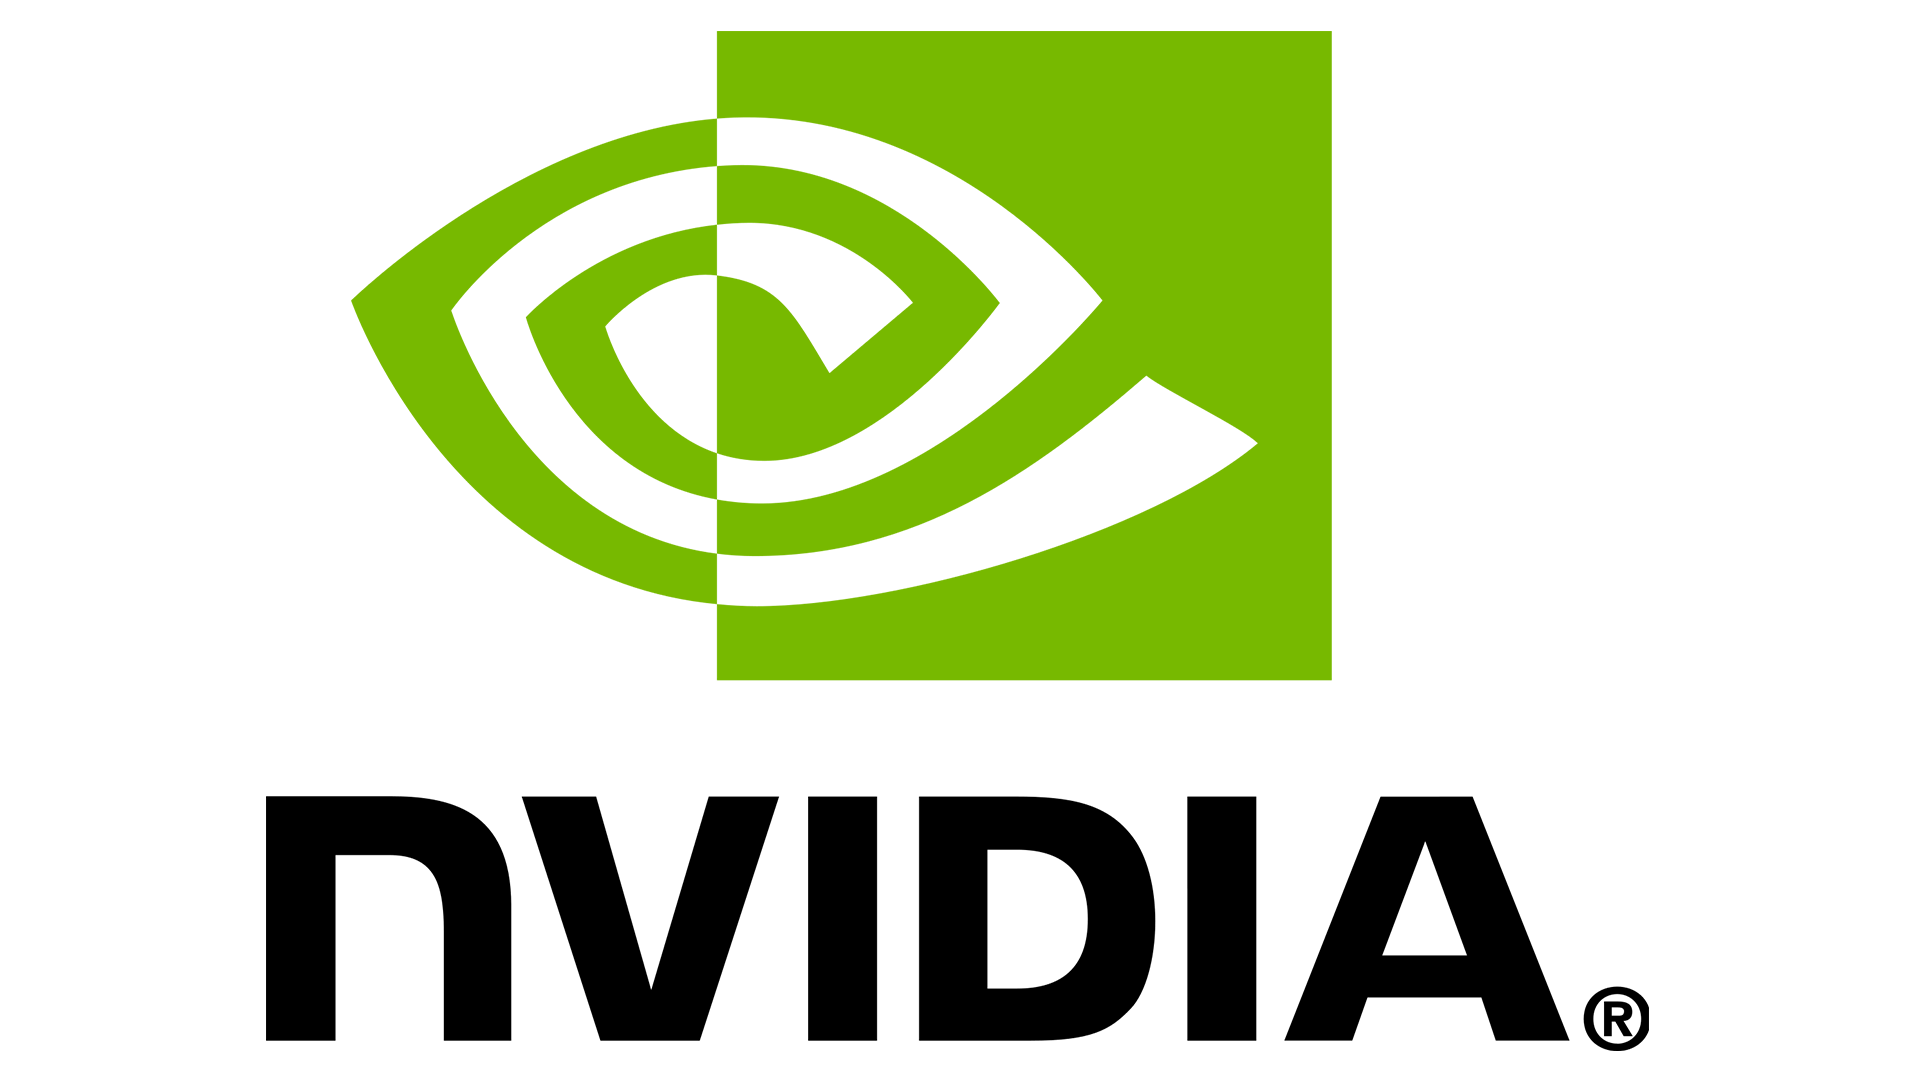 nvidia-logo-histoire-et-signification-evolution-symbole-nvidia